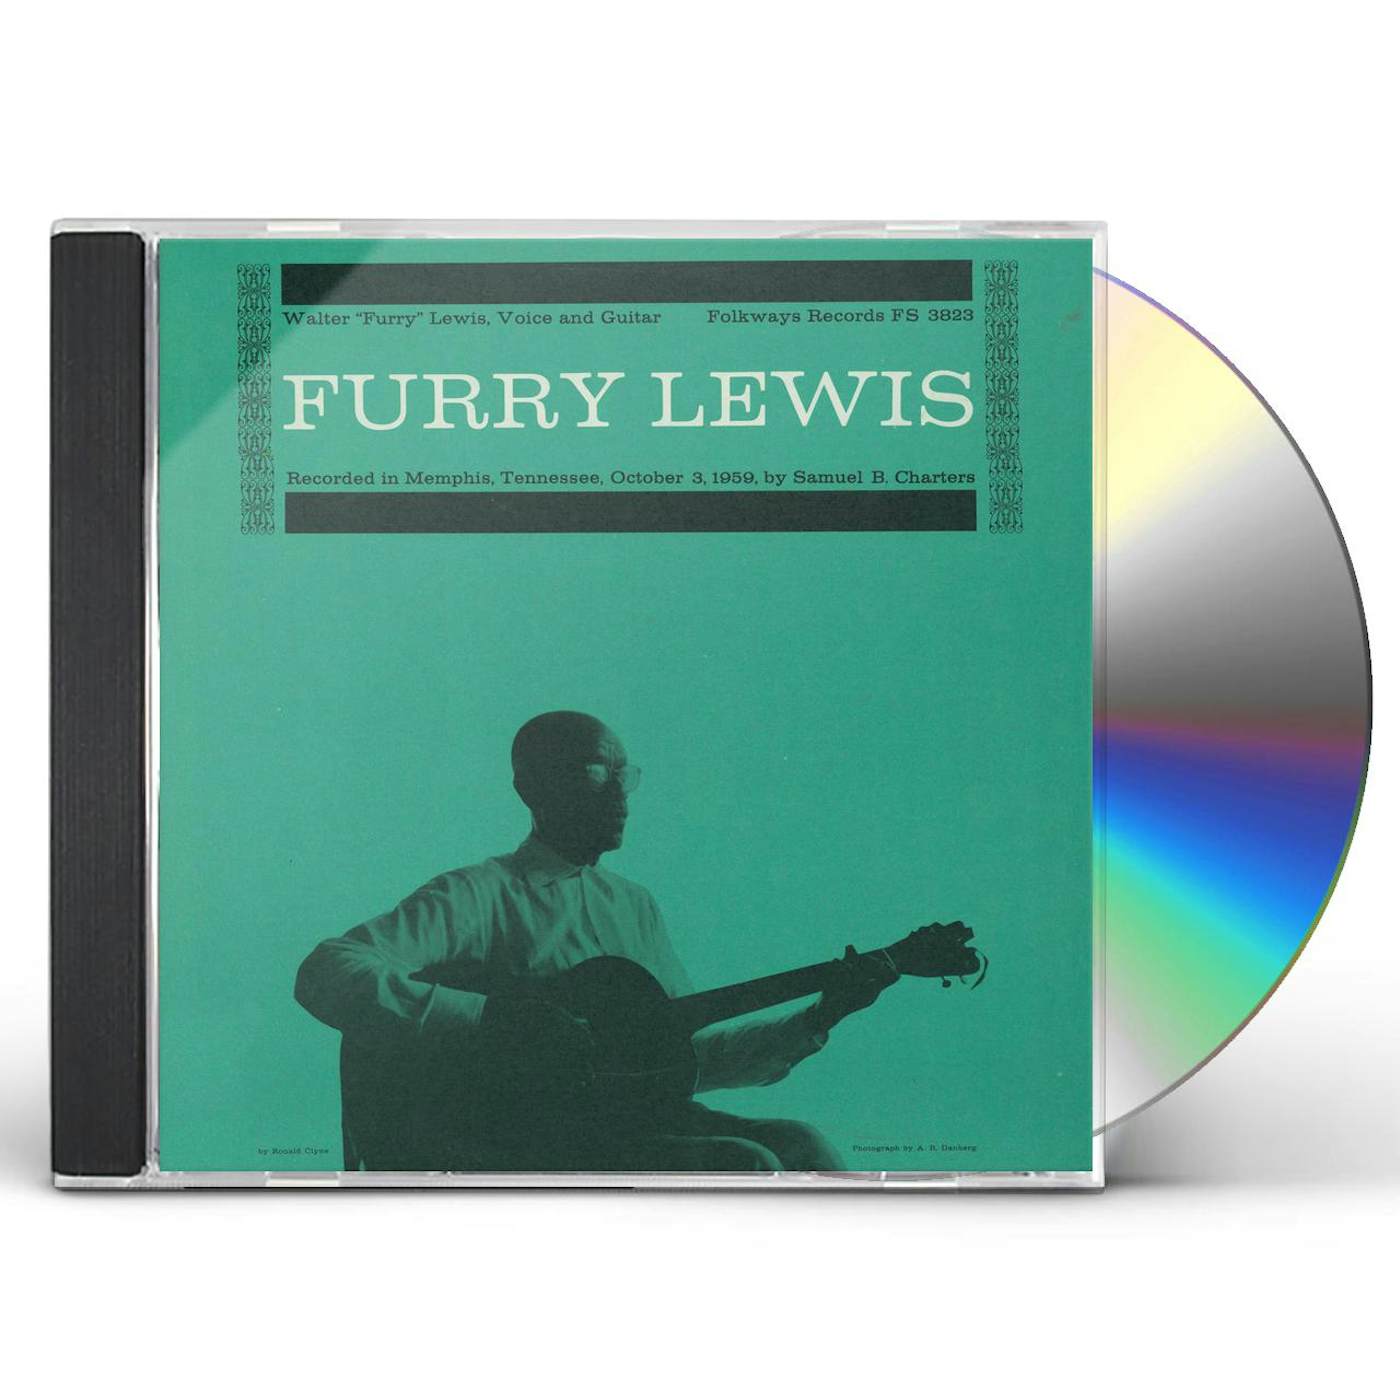 FURRY LEWIS CD